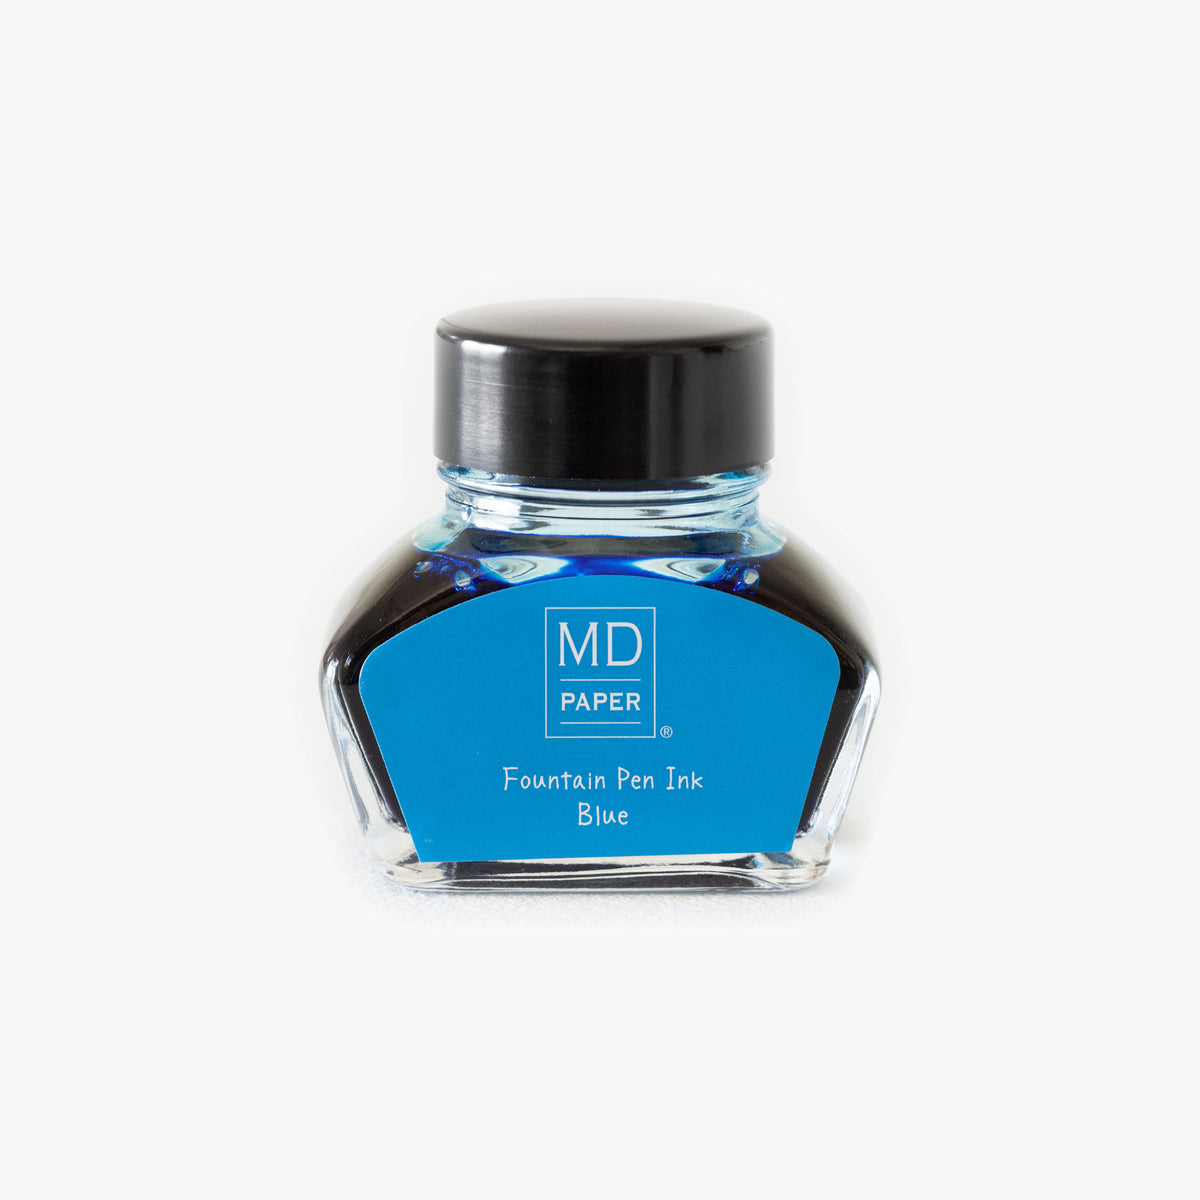 Midori - Fountain Pen Ink - MD - Blue <Outgoing>